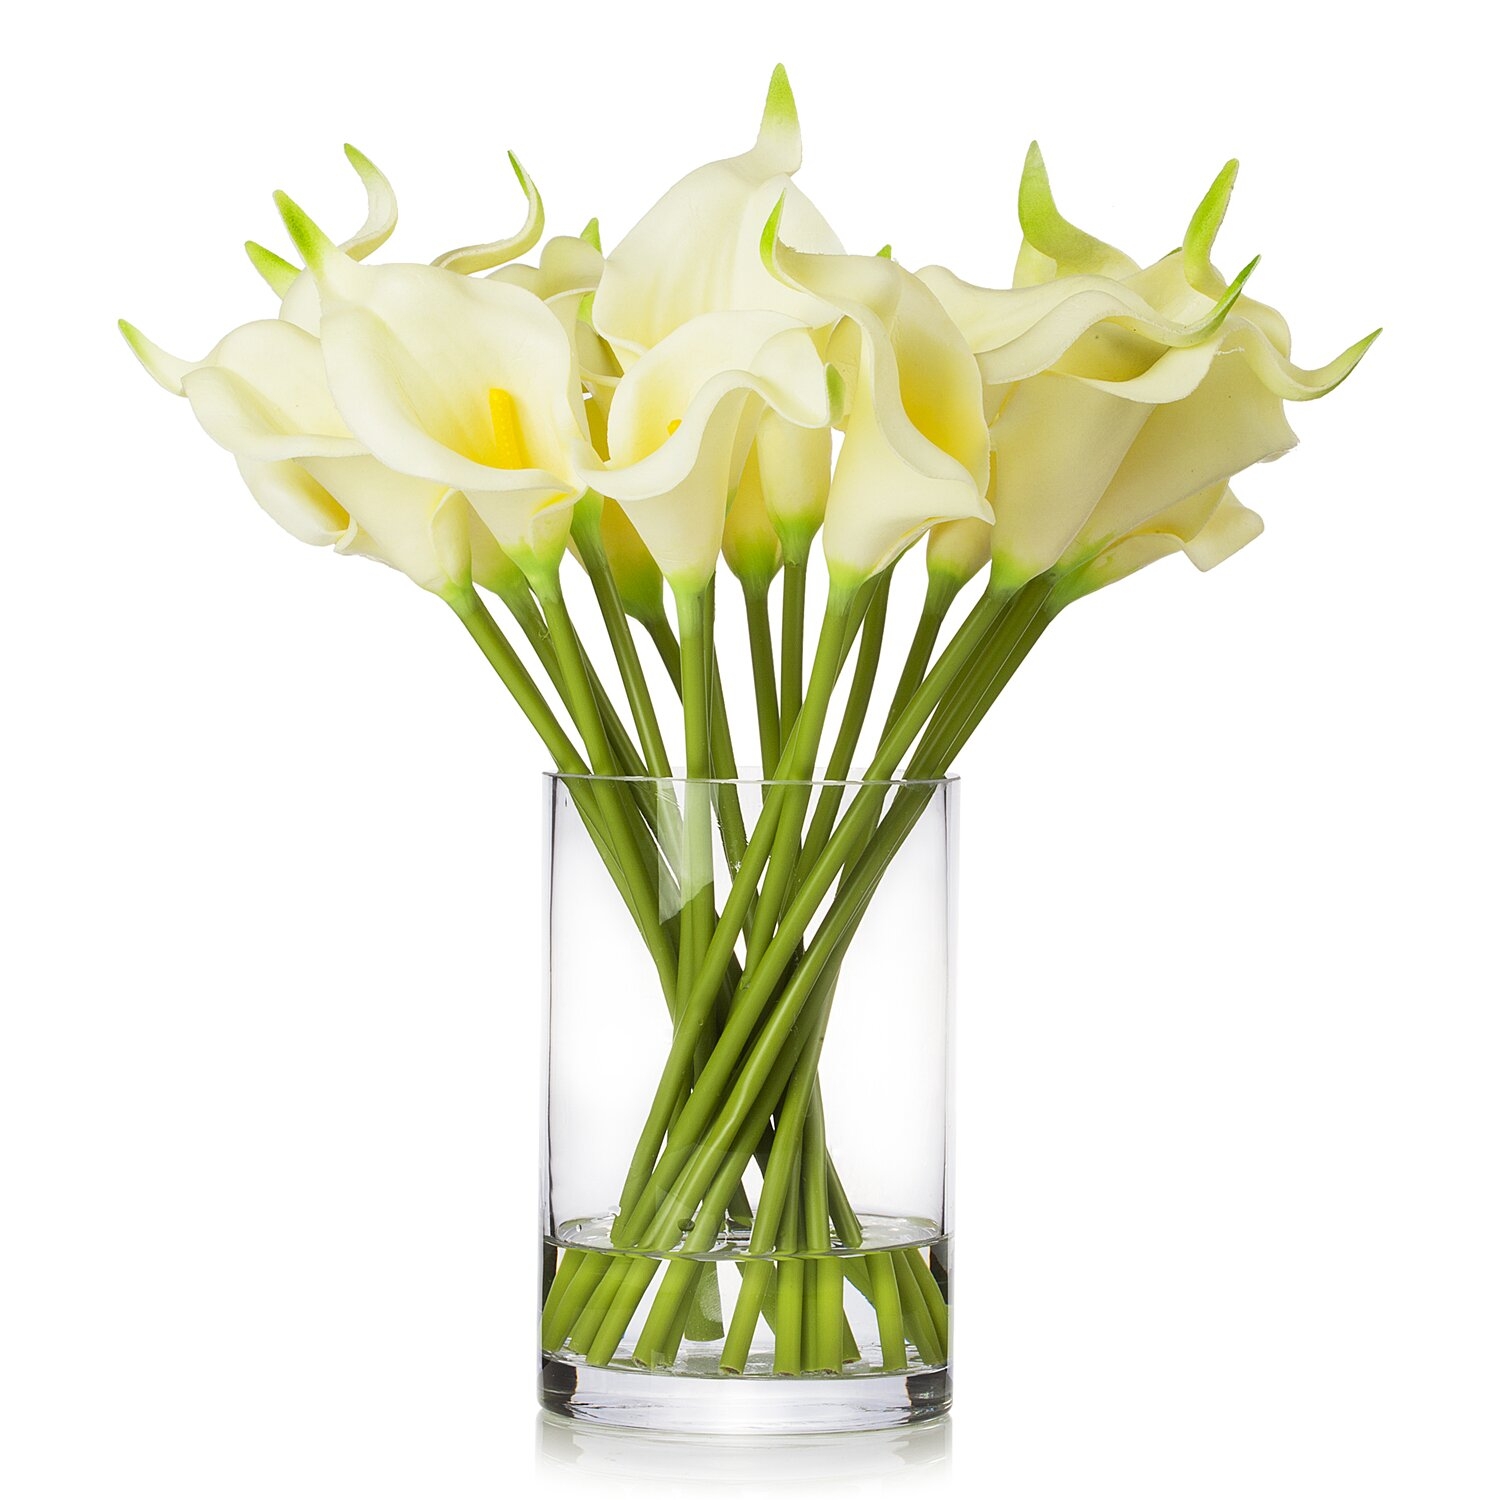 Lilies Flower Arrangement in Vase - Image 0